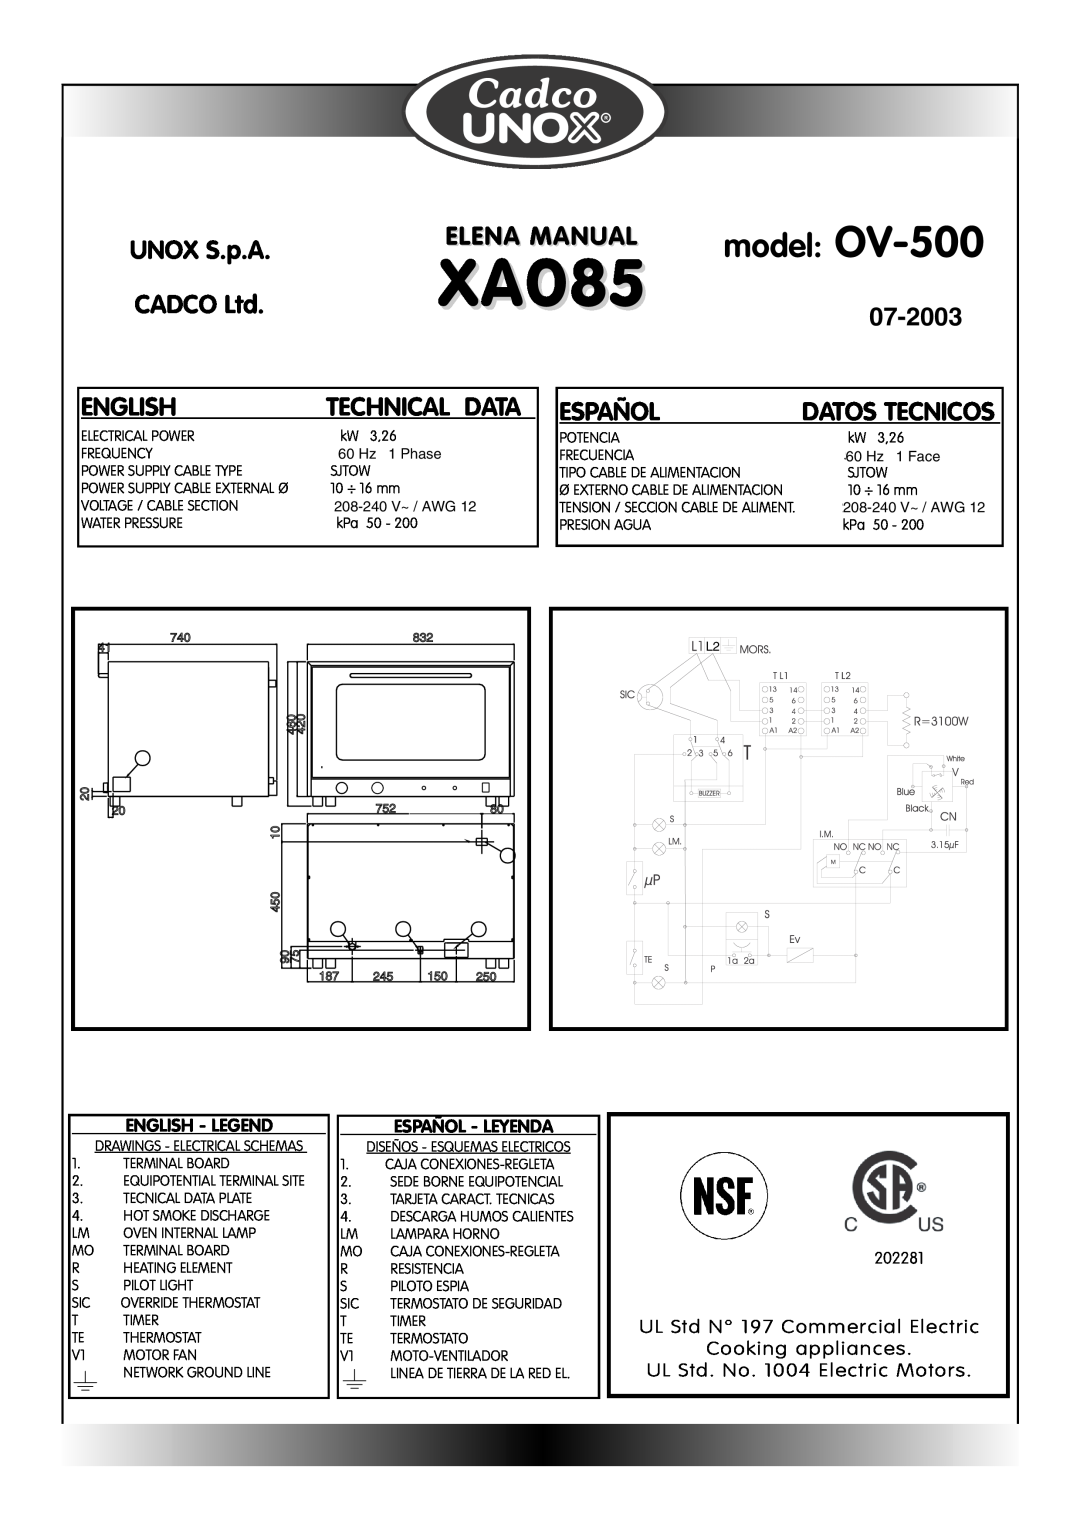 Cadco XA085, model OV-500, UNOX S.p.A, Elena Manual, 07-2003, English, Español, Technical Data, Datos Tecnicos, 202281 